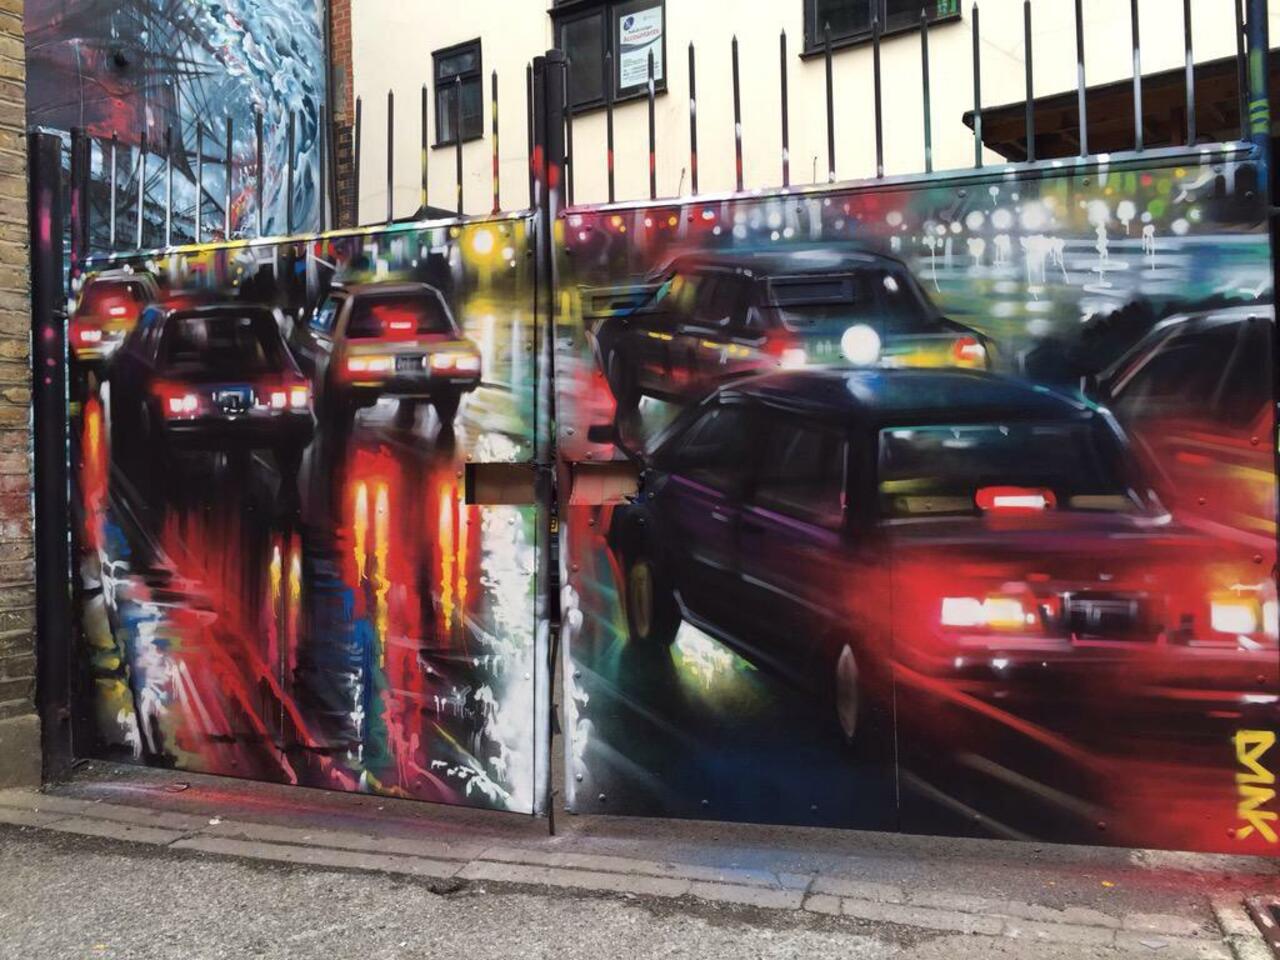 New Street Art by DanKitchener in Brick Lane London 

#art #graffiti #mural #streetart http://t.co/D4EQZIOYXU